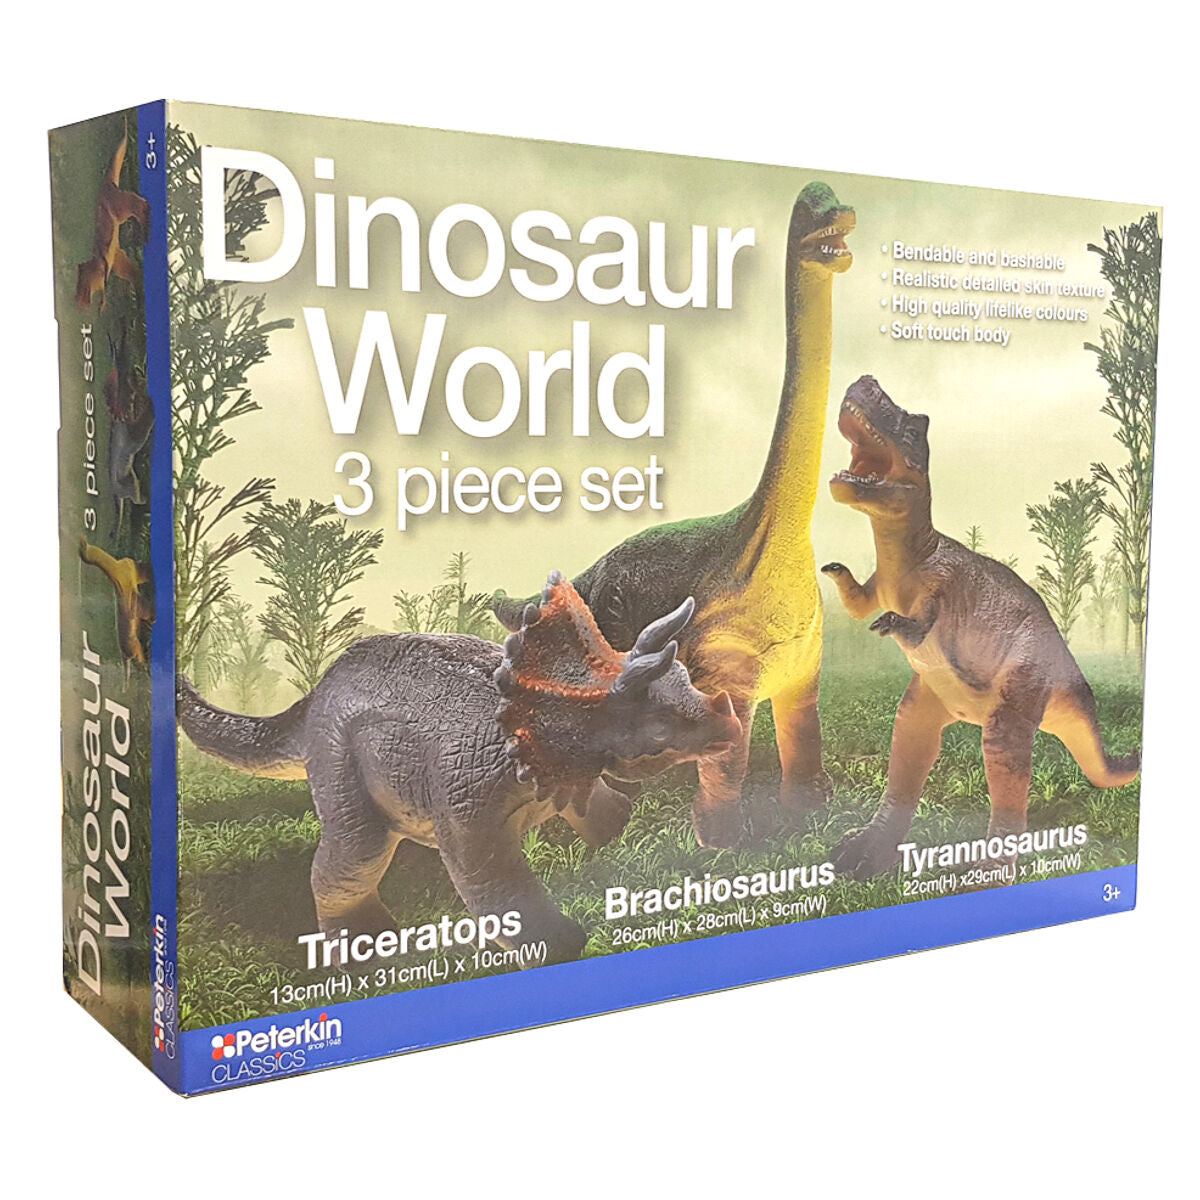 Dinosaur World 3 Piece Set of Figures